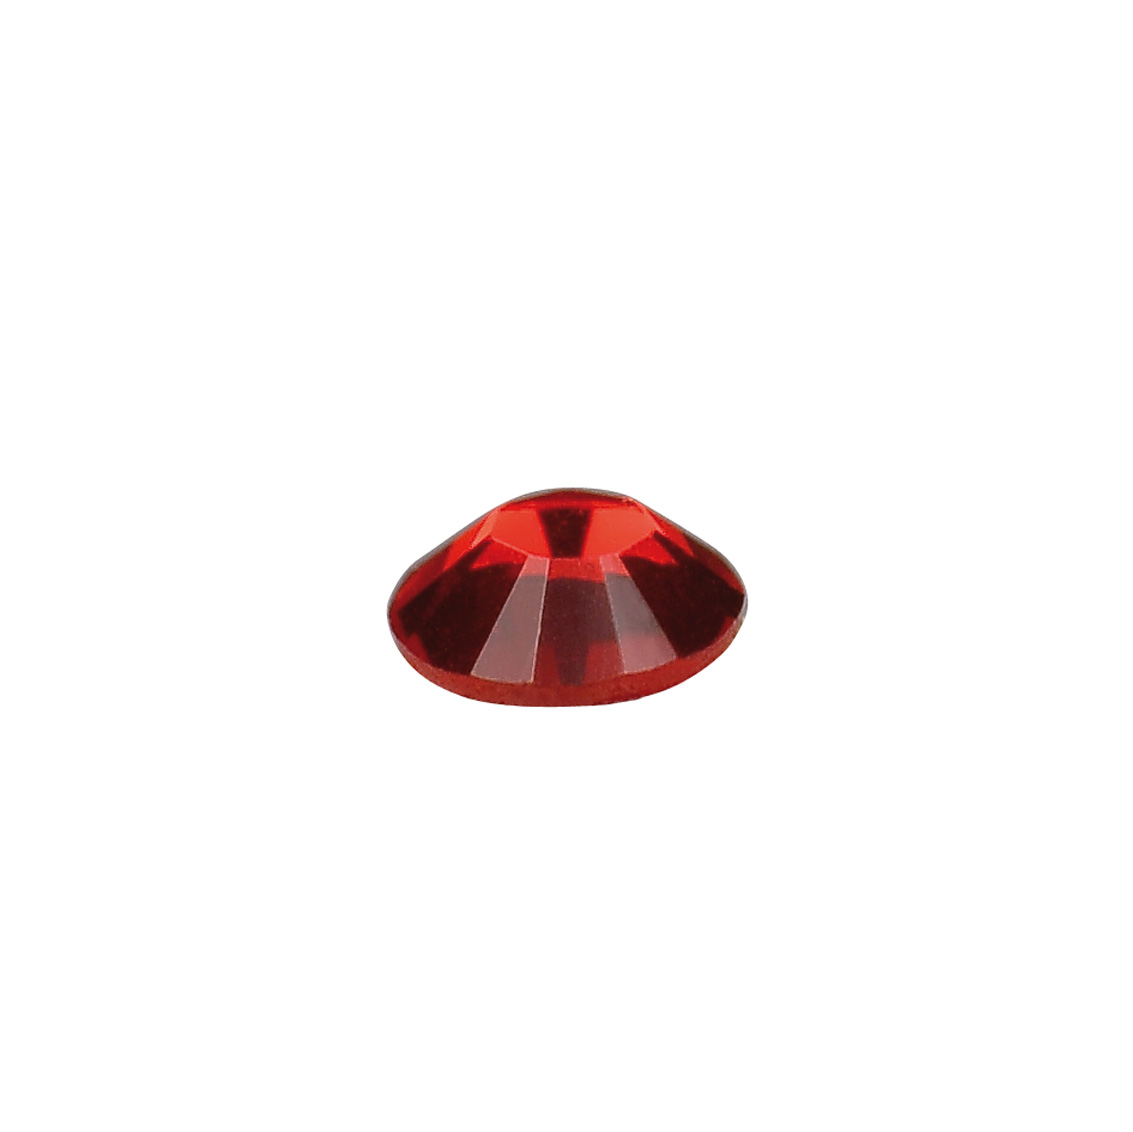 Swarovski® Crystals for Nail Art Light Siam size SS6 1440 pcs.